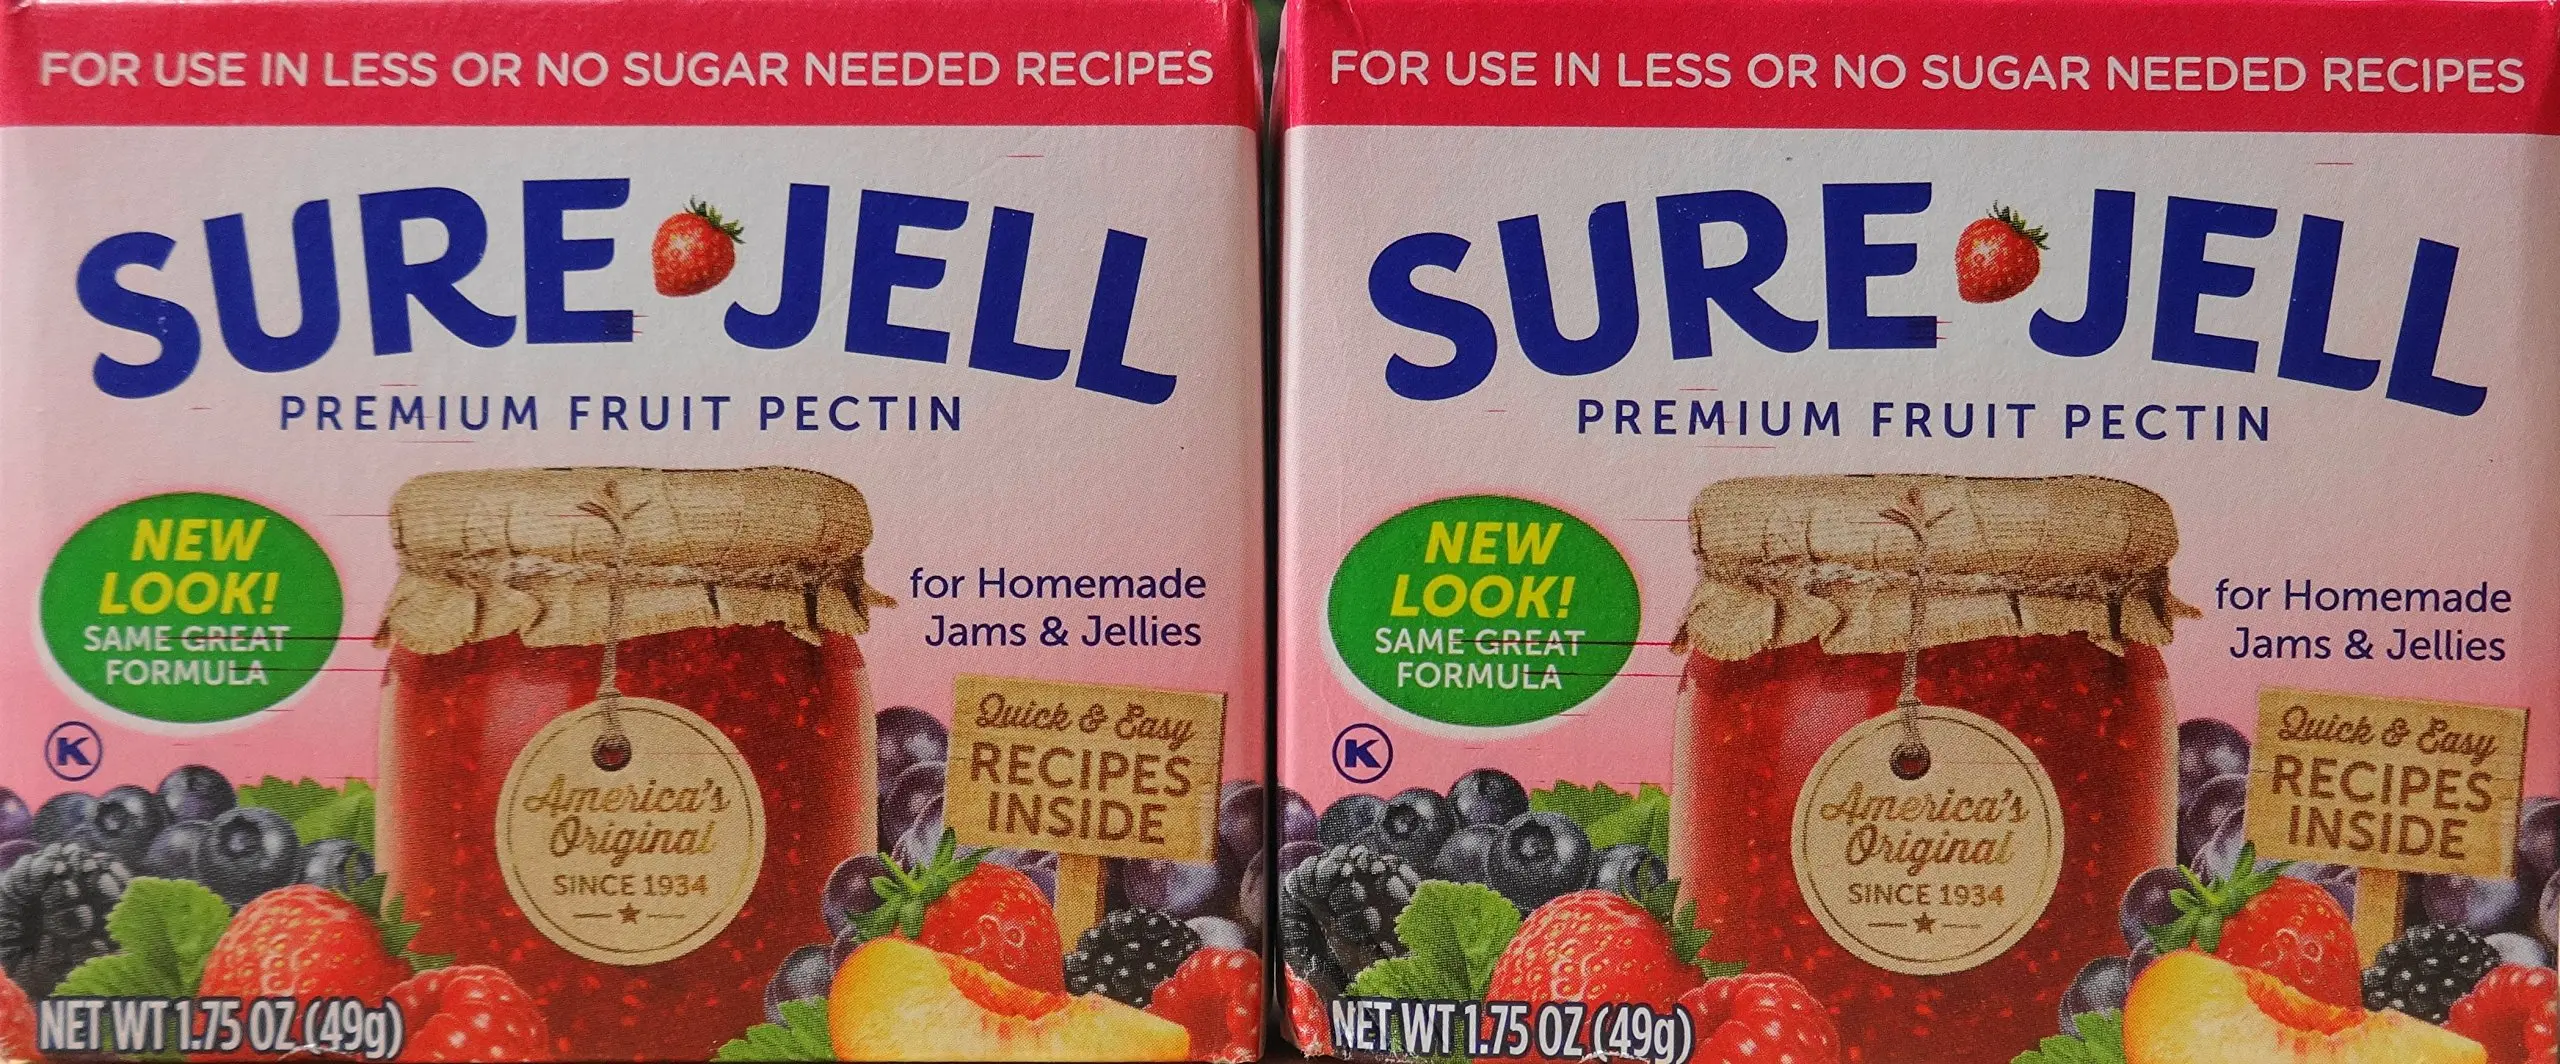 Sure Jell Premium Fruit Pectin, 1.75 Oz (49g) Twin Pack. 